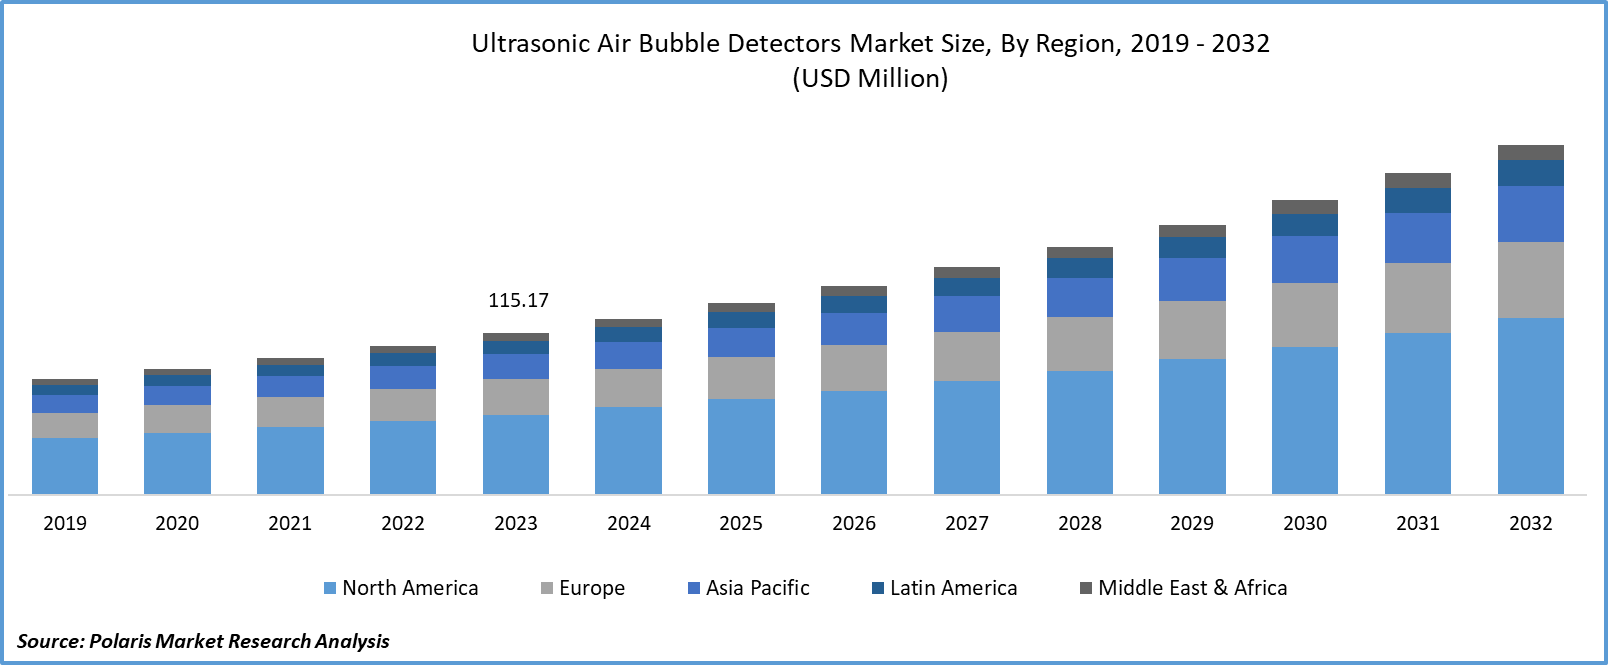 Ultrasonic Air Bubble Detectors Market Size